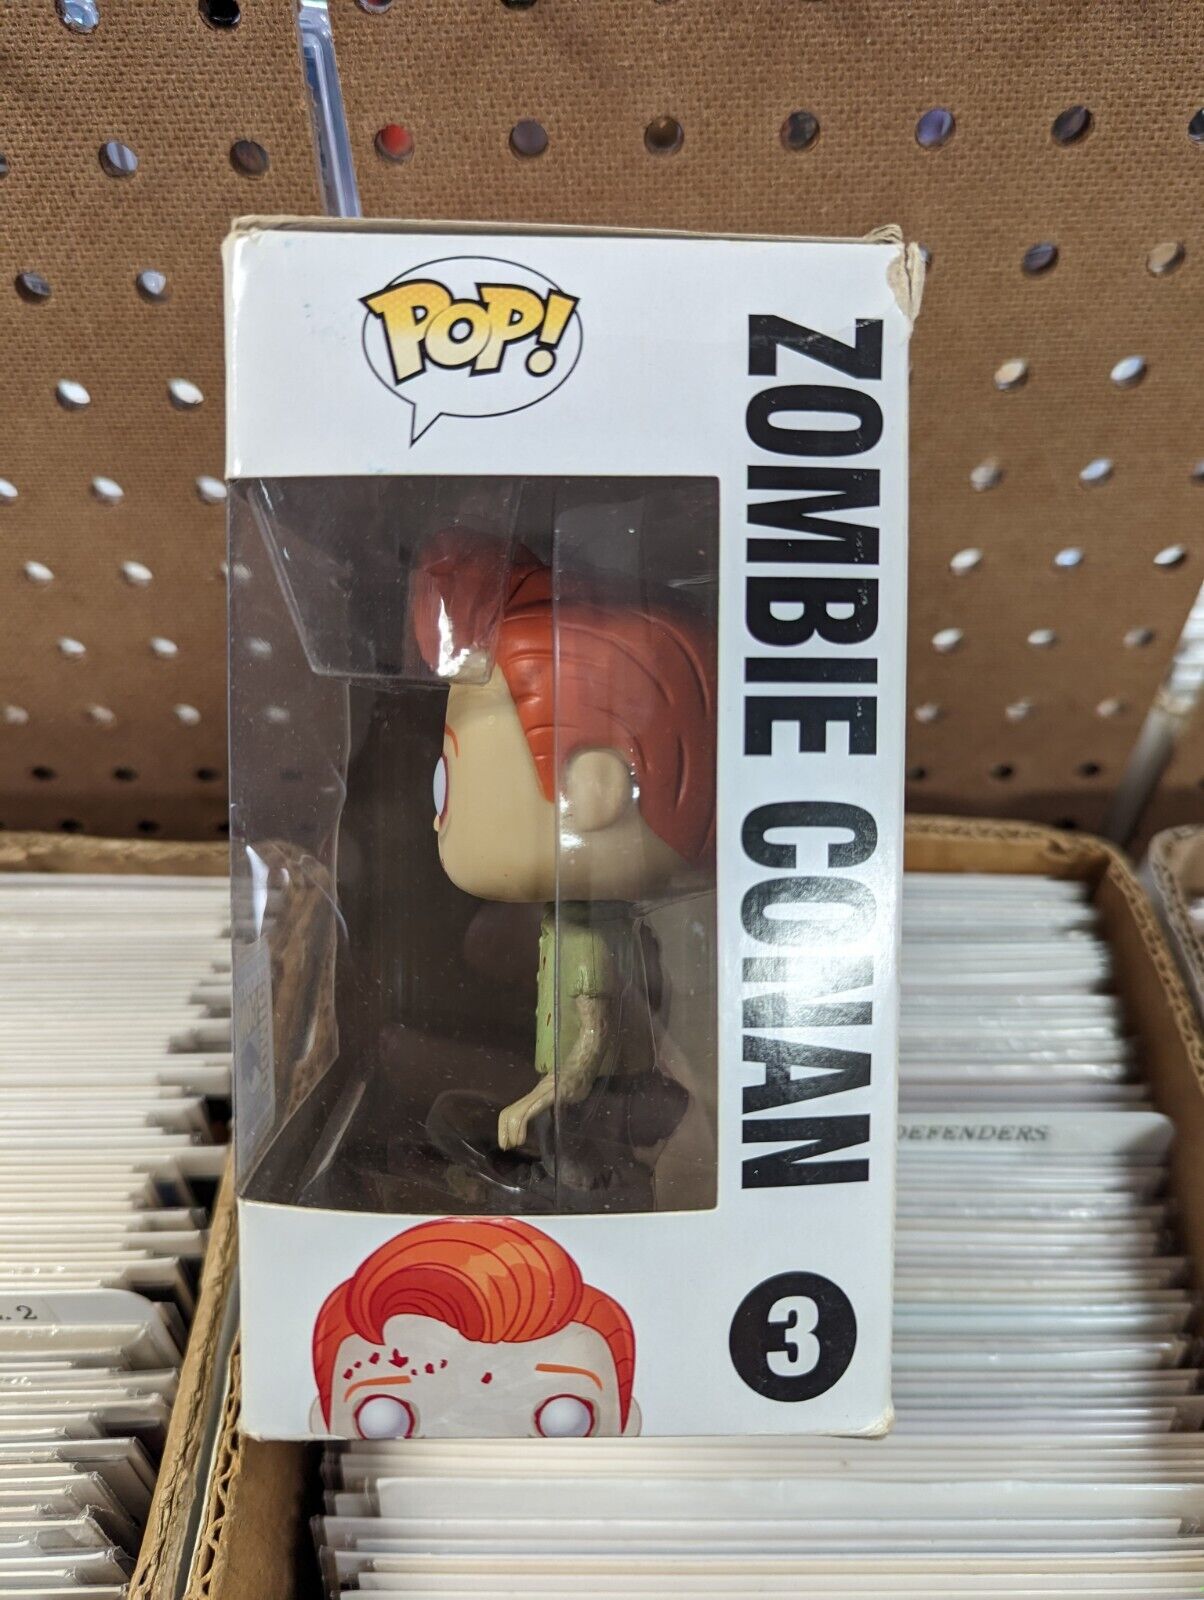 Funko Pop Zombie Conan 3 SDCC 2015 *Box Damage*